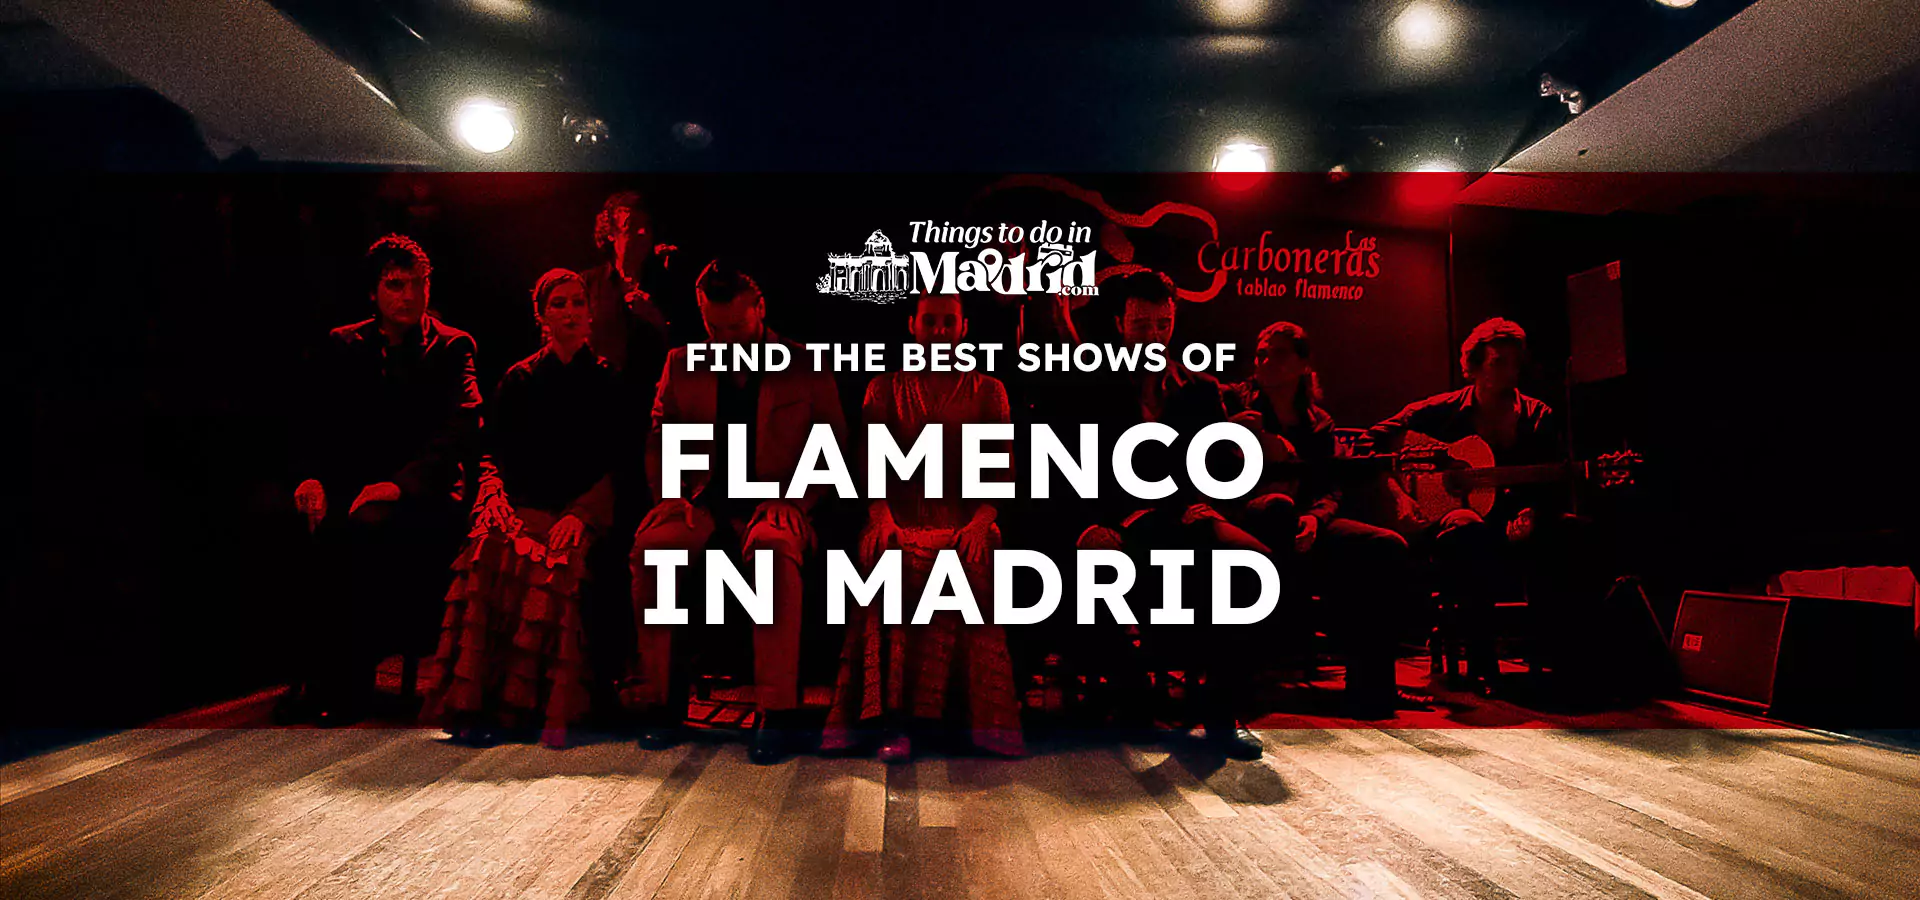 flamenco-in-madrid-show-tour-dinner